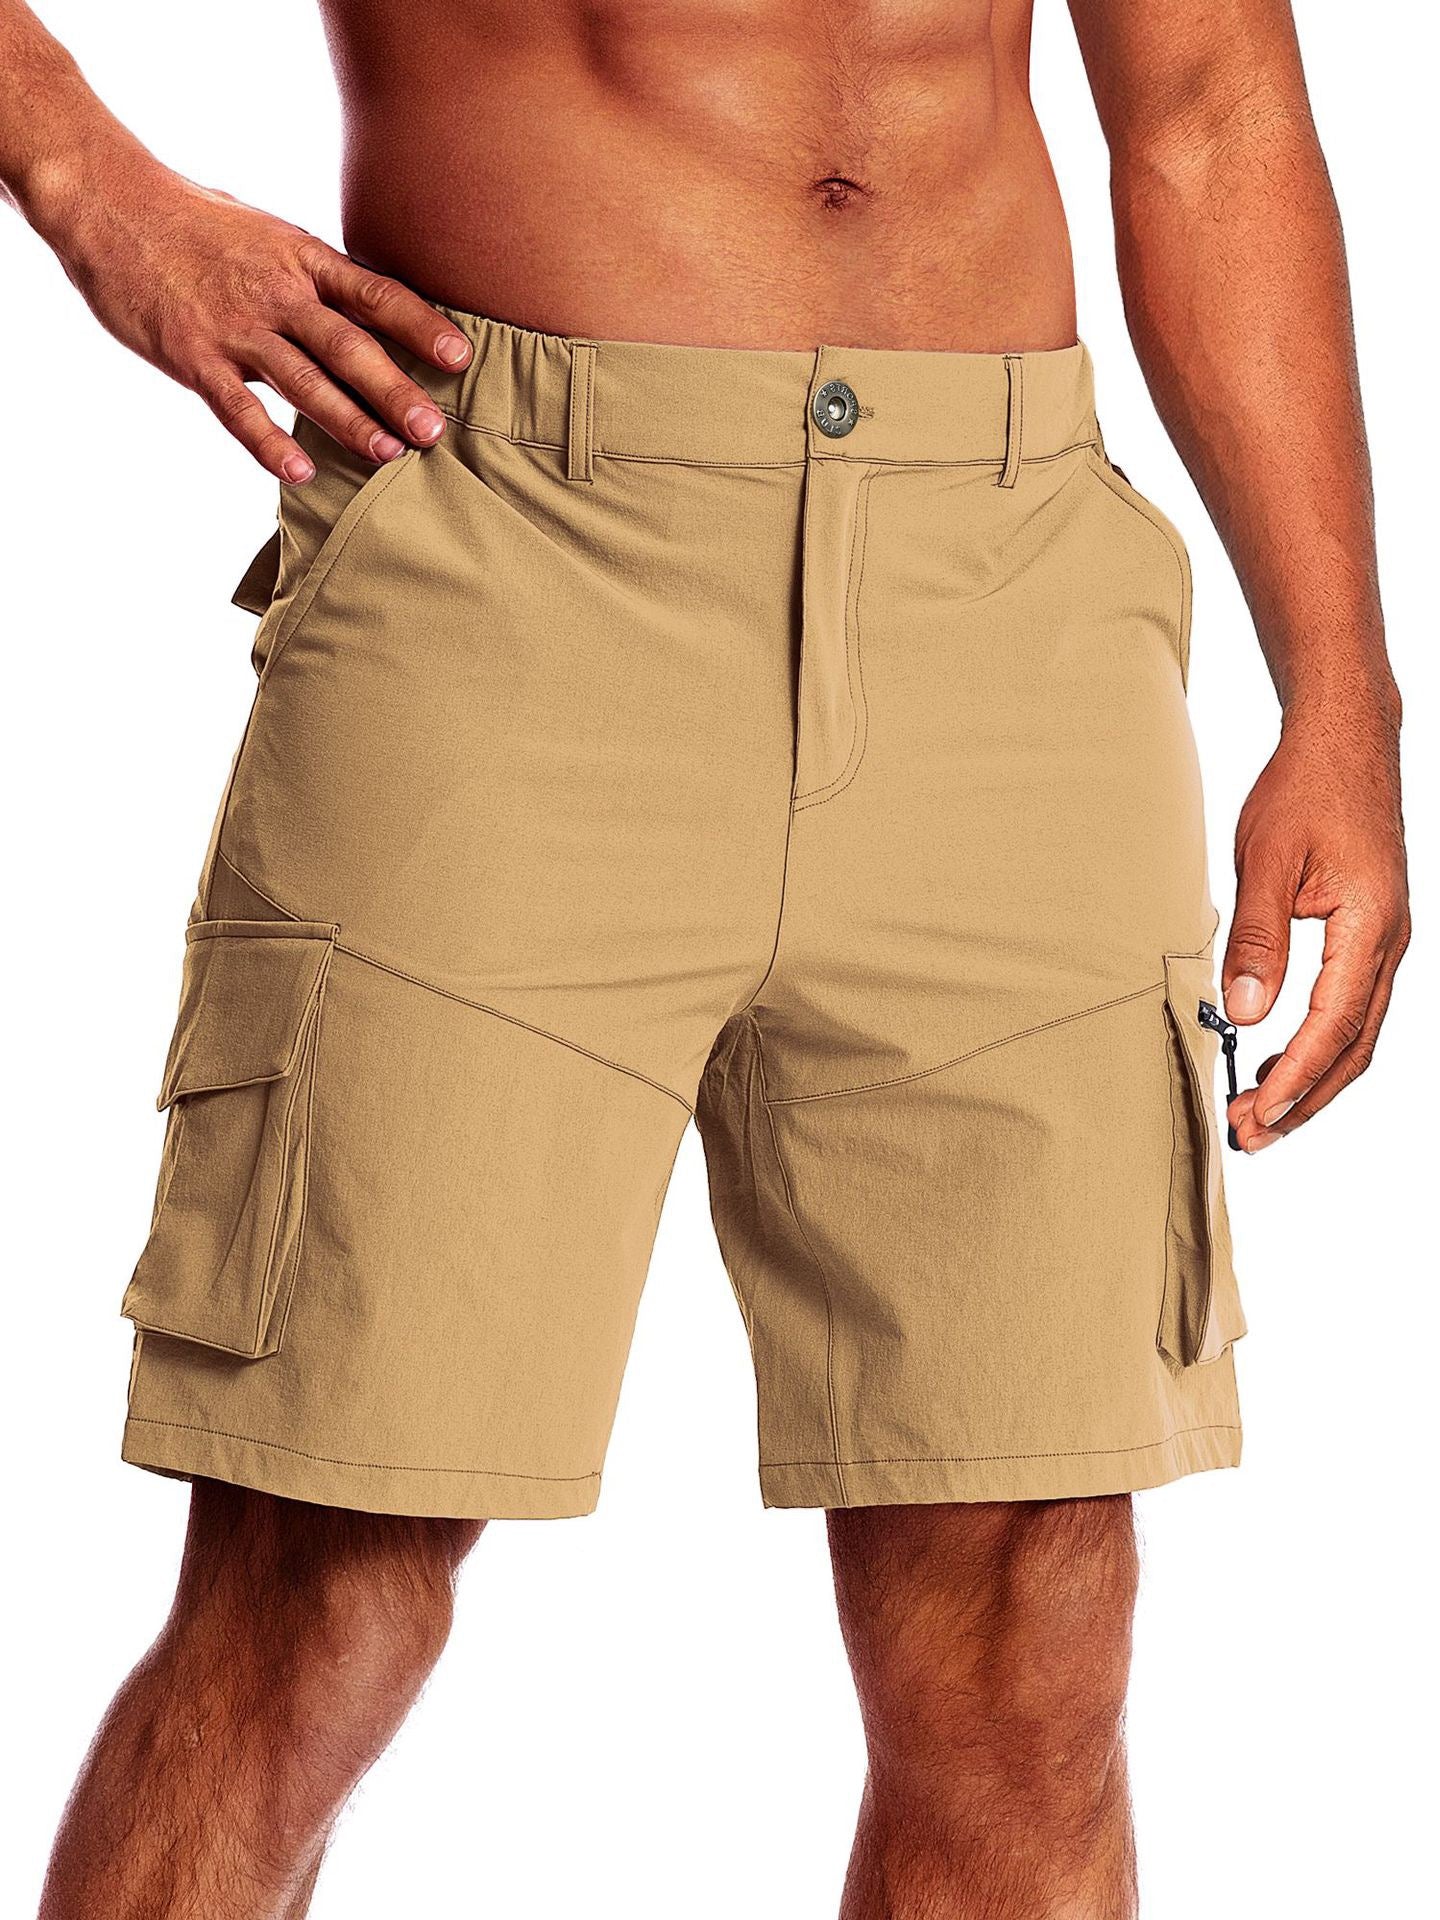 Men's Hiking Shorts Tactical Shorts Military Summer Outdoor Ripstop Breathable Shorts Bottoms Zipper Pocket